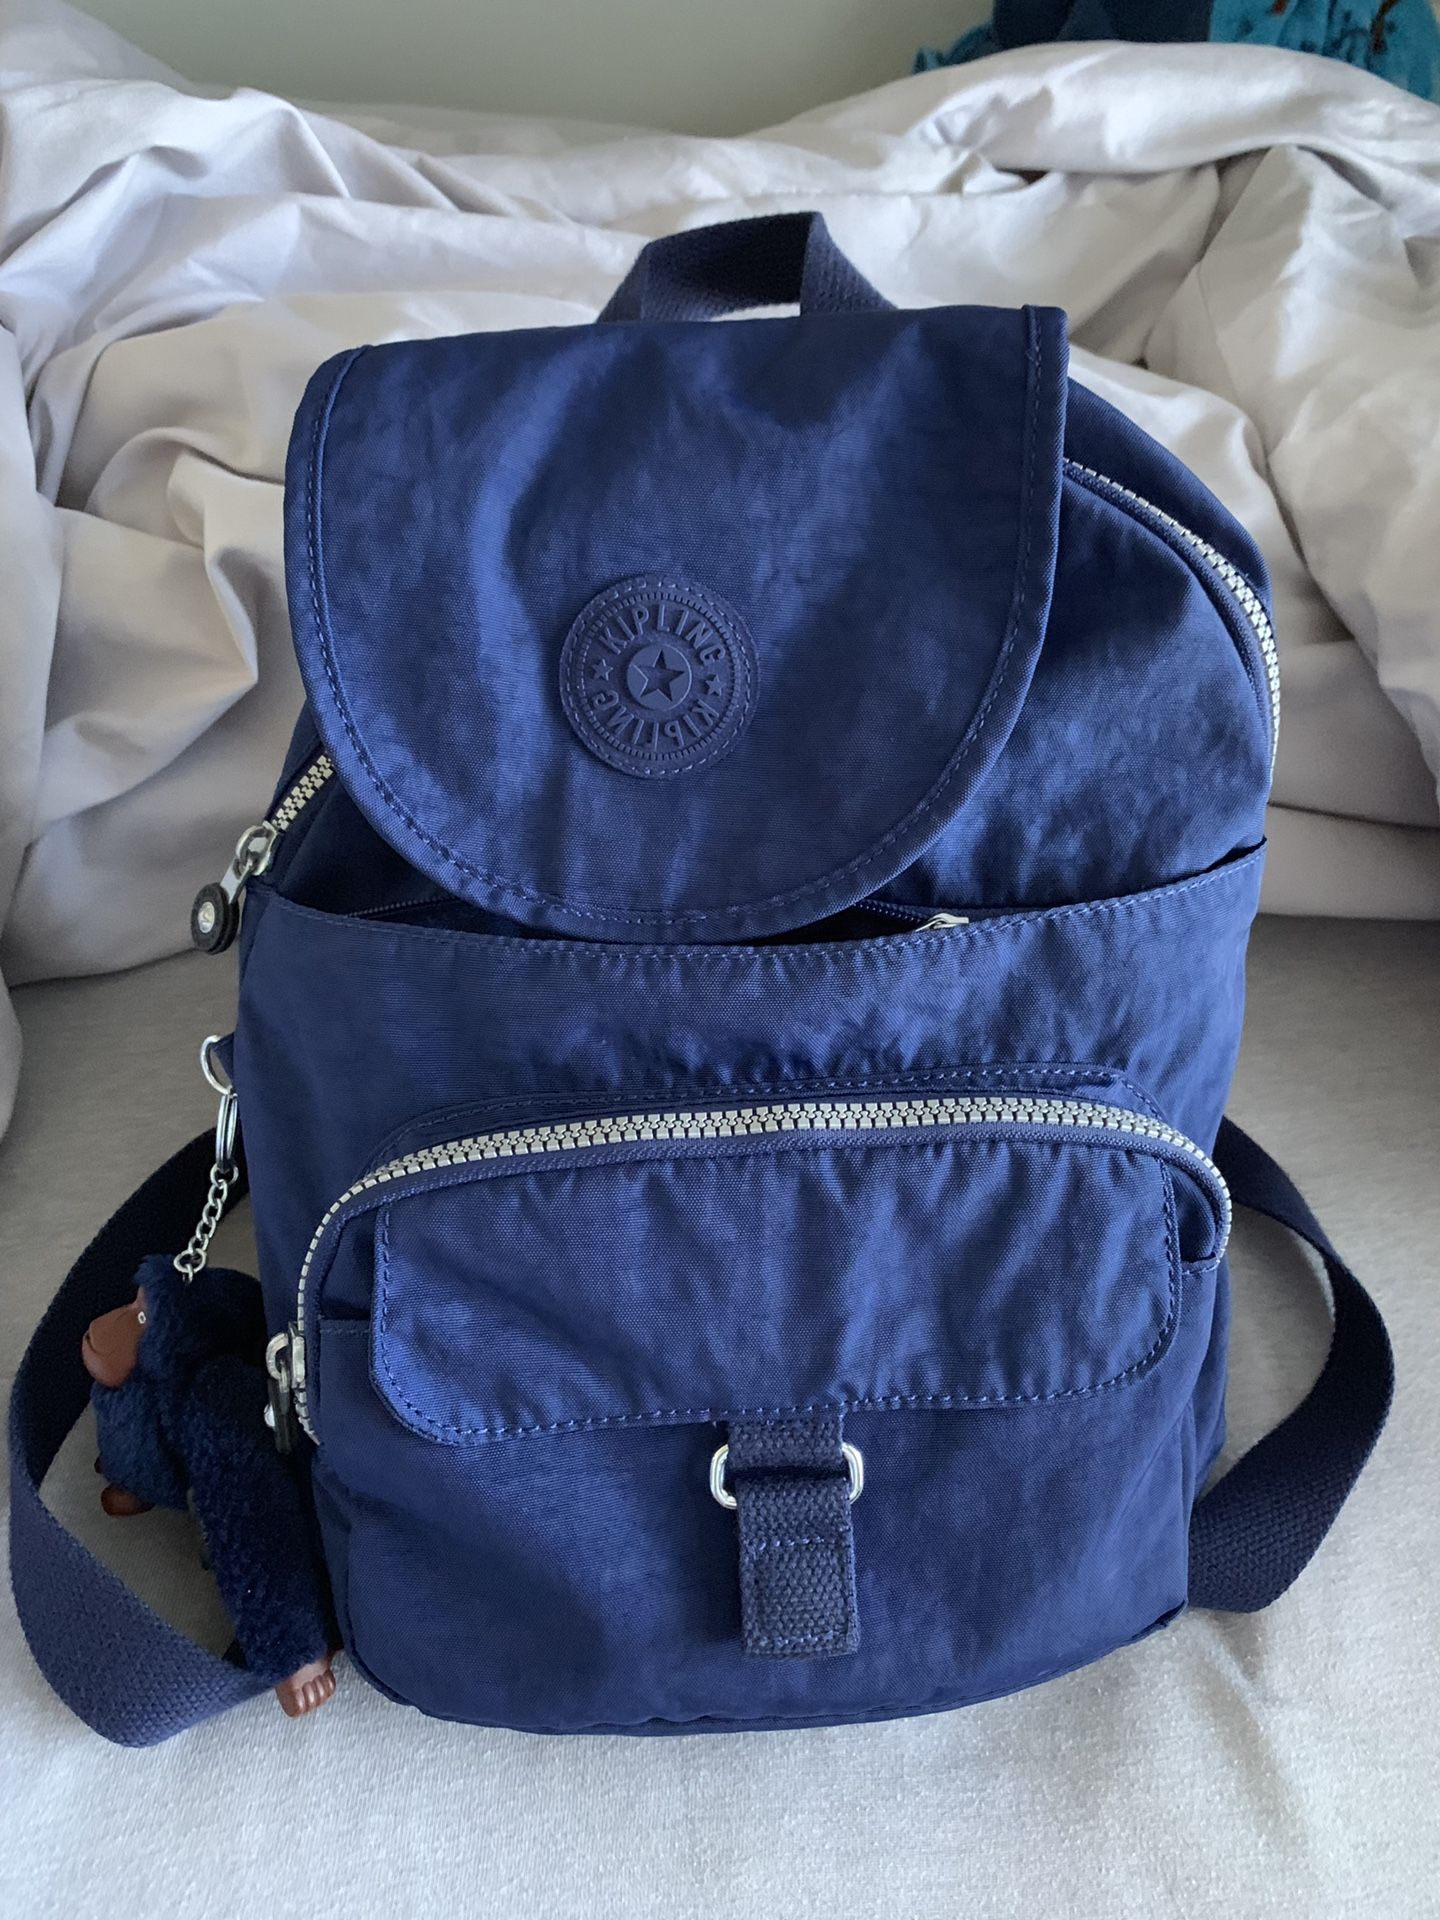 Kipling backpack (purse)